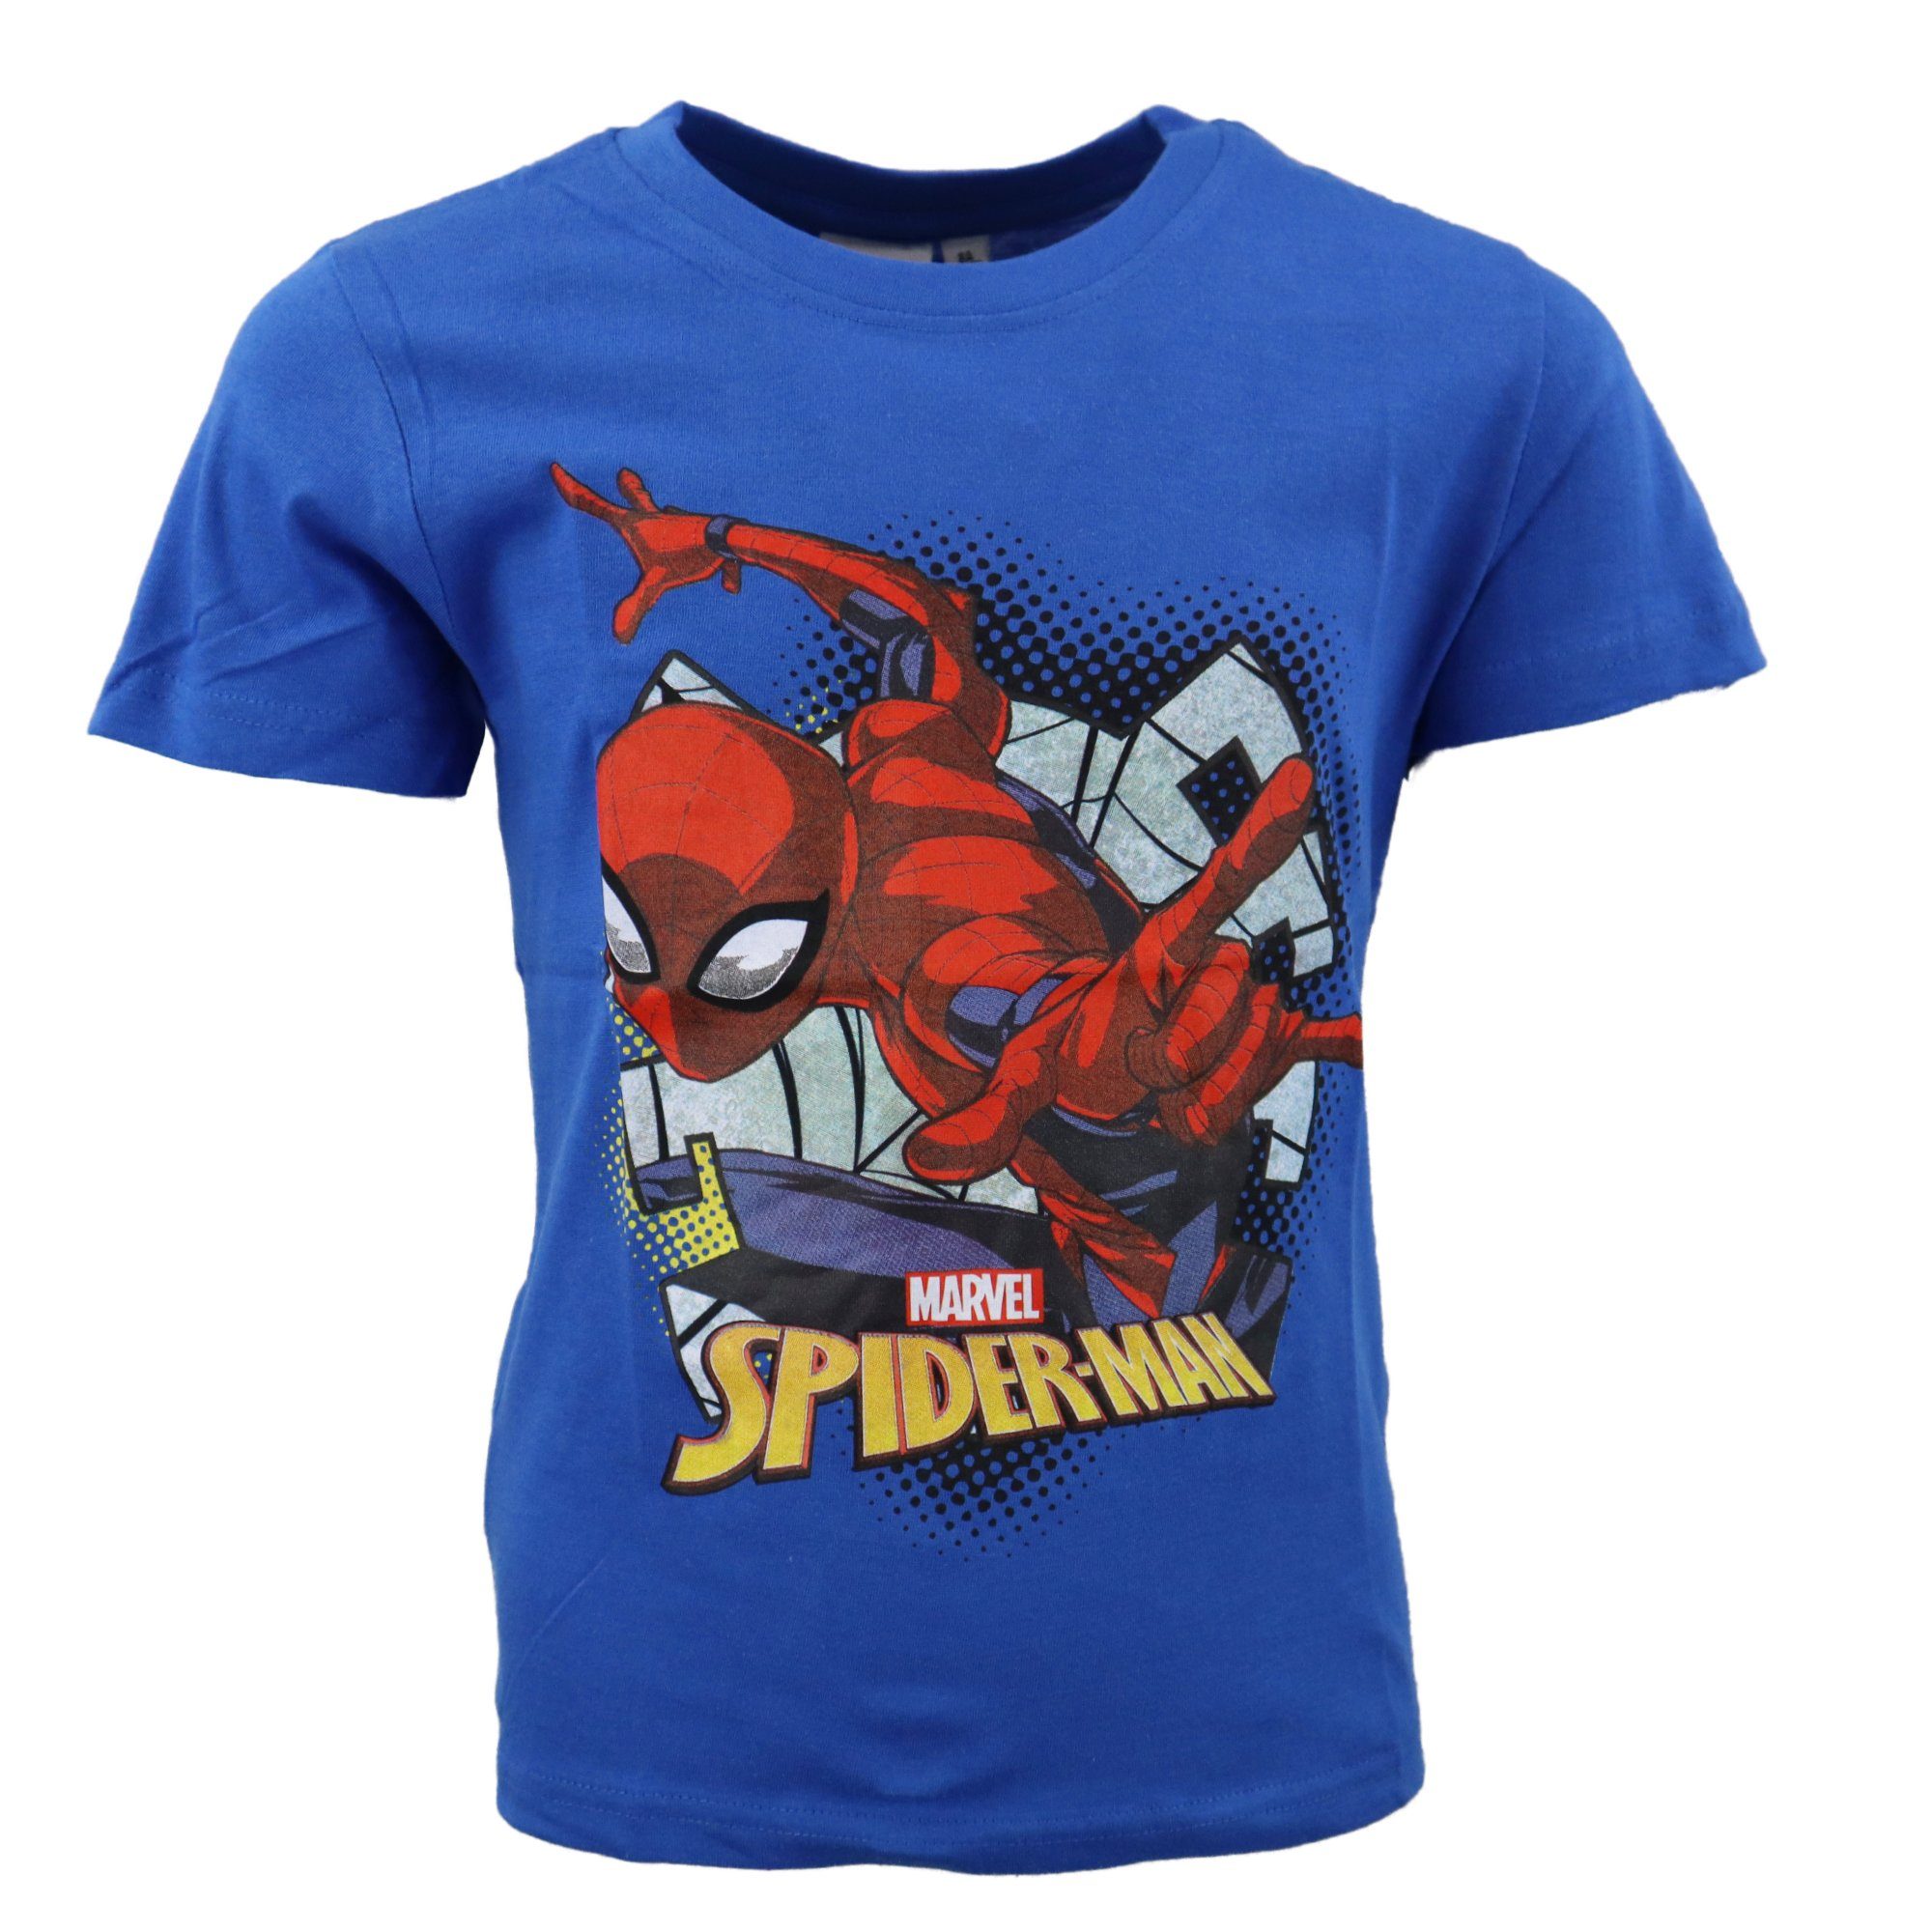 MARVEL Print-Shirt Spiderman T-Shirt kurzarm Kinder Jungen Shirt Gr. 98 bis 128, 100% Baumwolle Hellblau